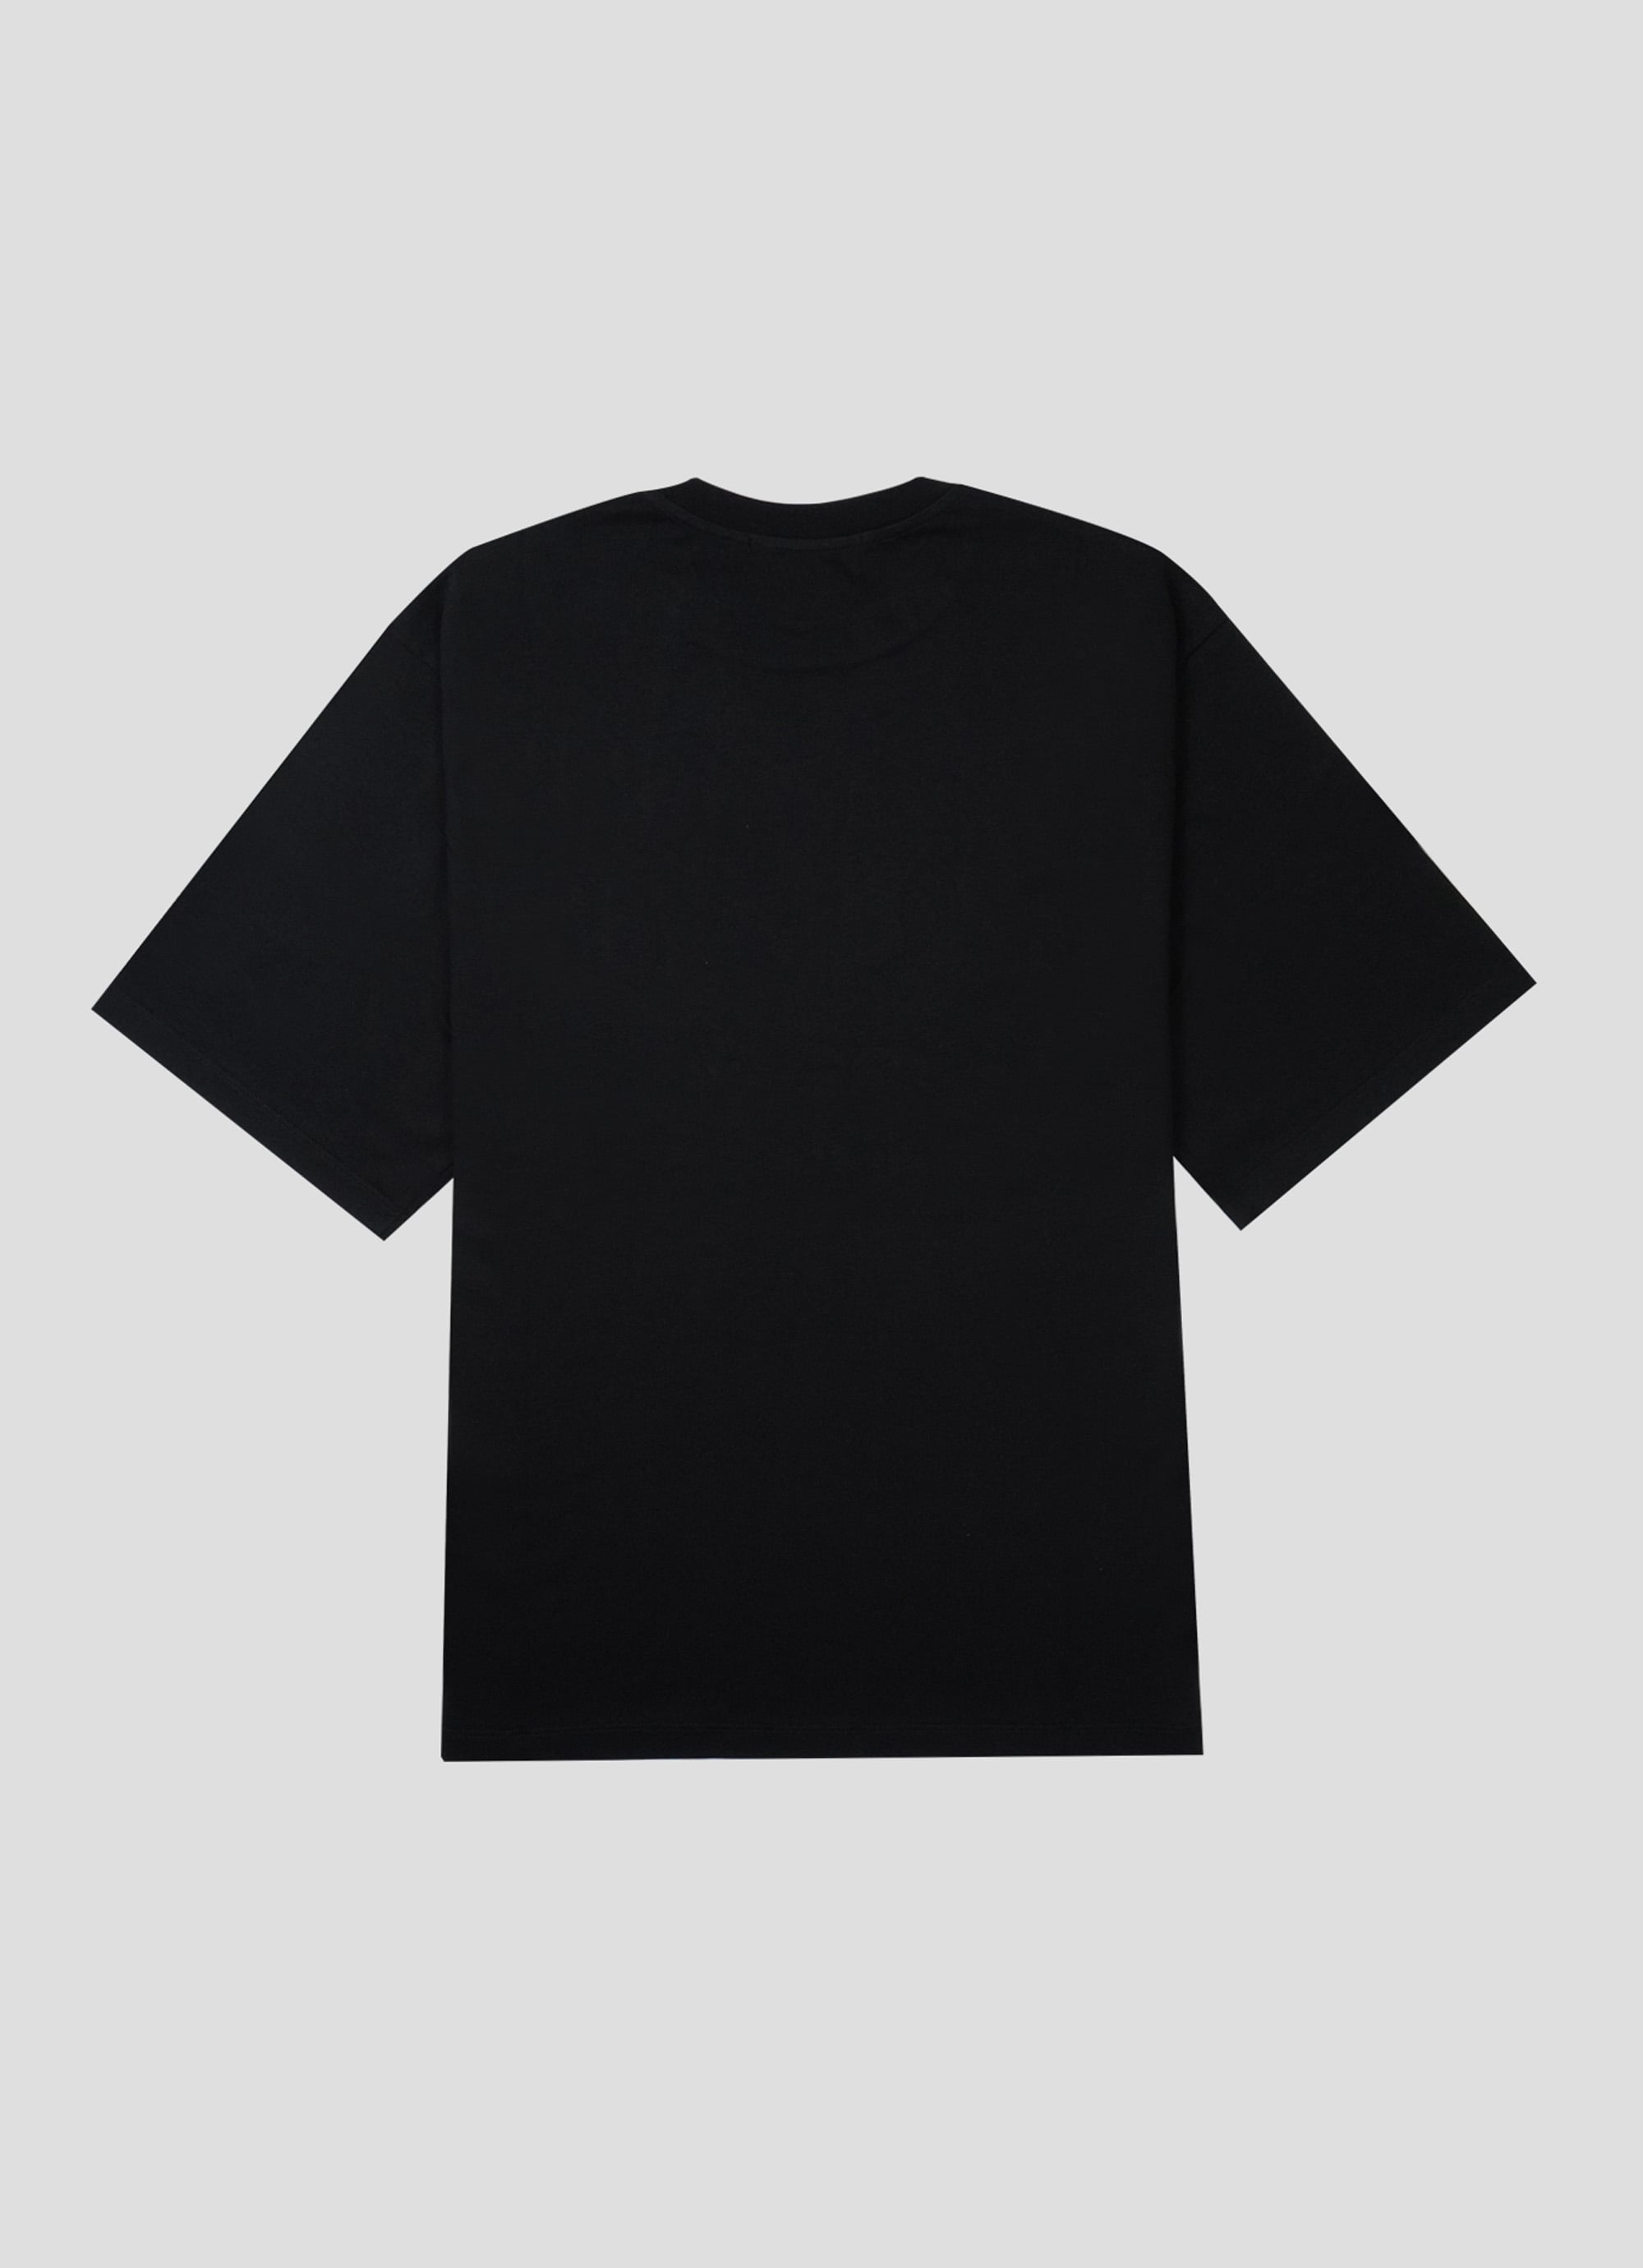 MSGM NEWブラッシュストロークロゴTシャツ 詳細画像 ブラック×ホワイト 2